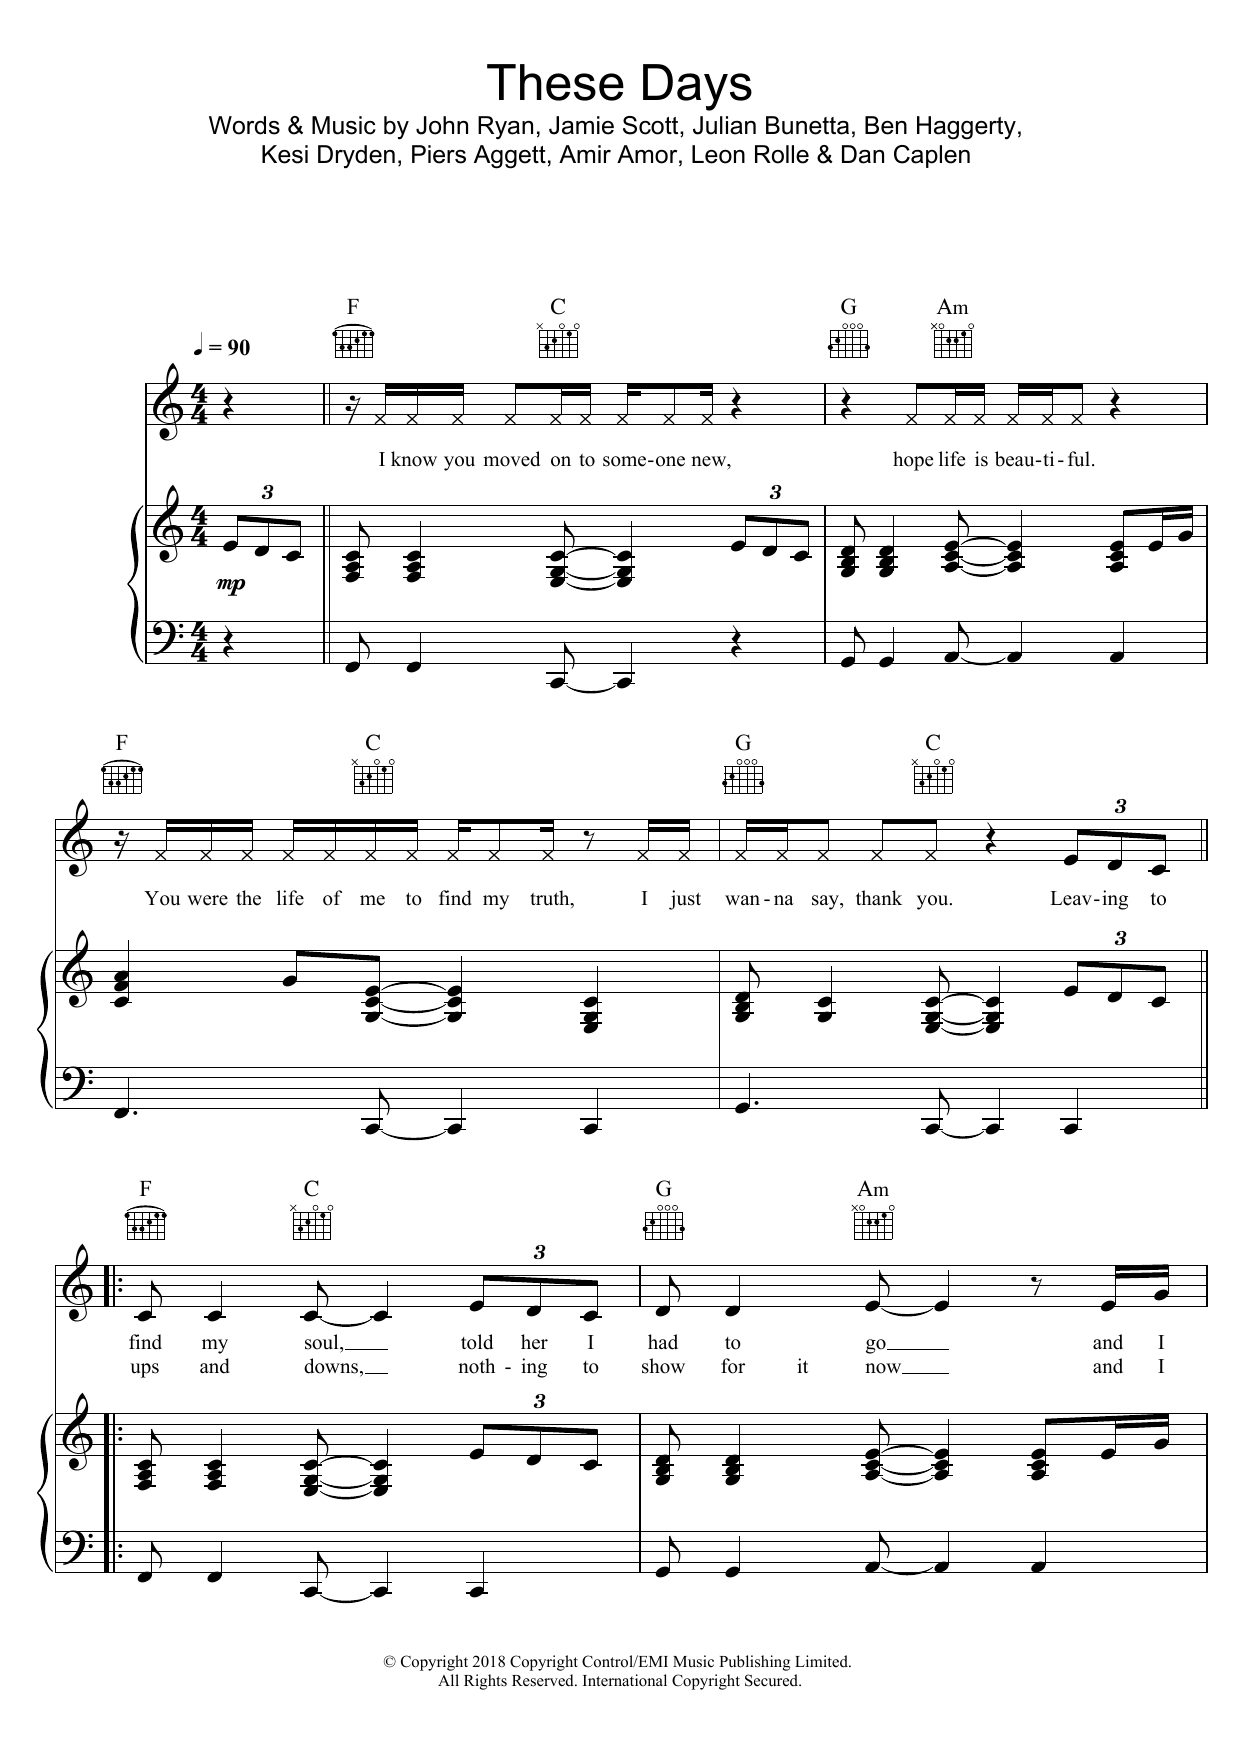 Download Rudimental These Days (feat. Jess Glynne, Macklemore & Dan Caplen) Sheet Music and learn how to play Beginner Ukulele PDF digital score in minutes